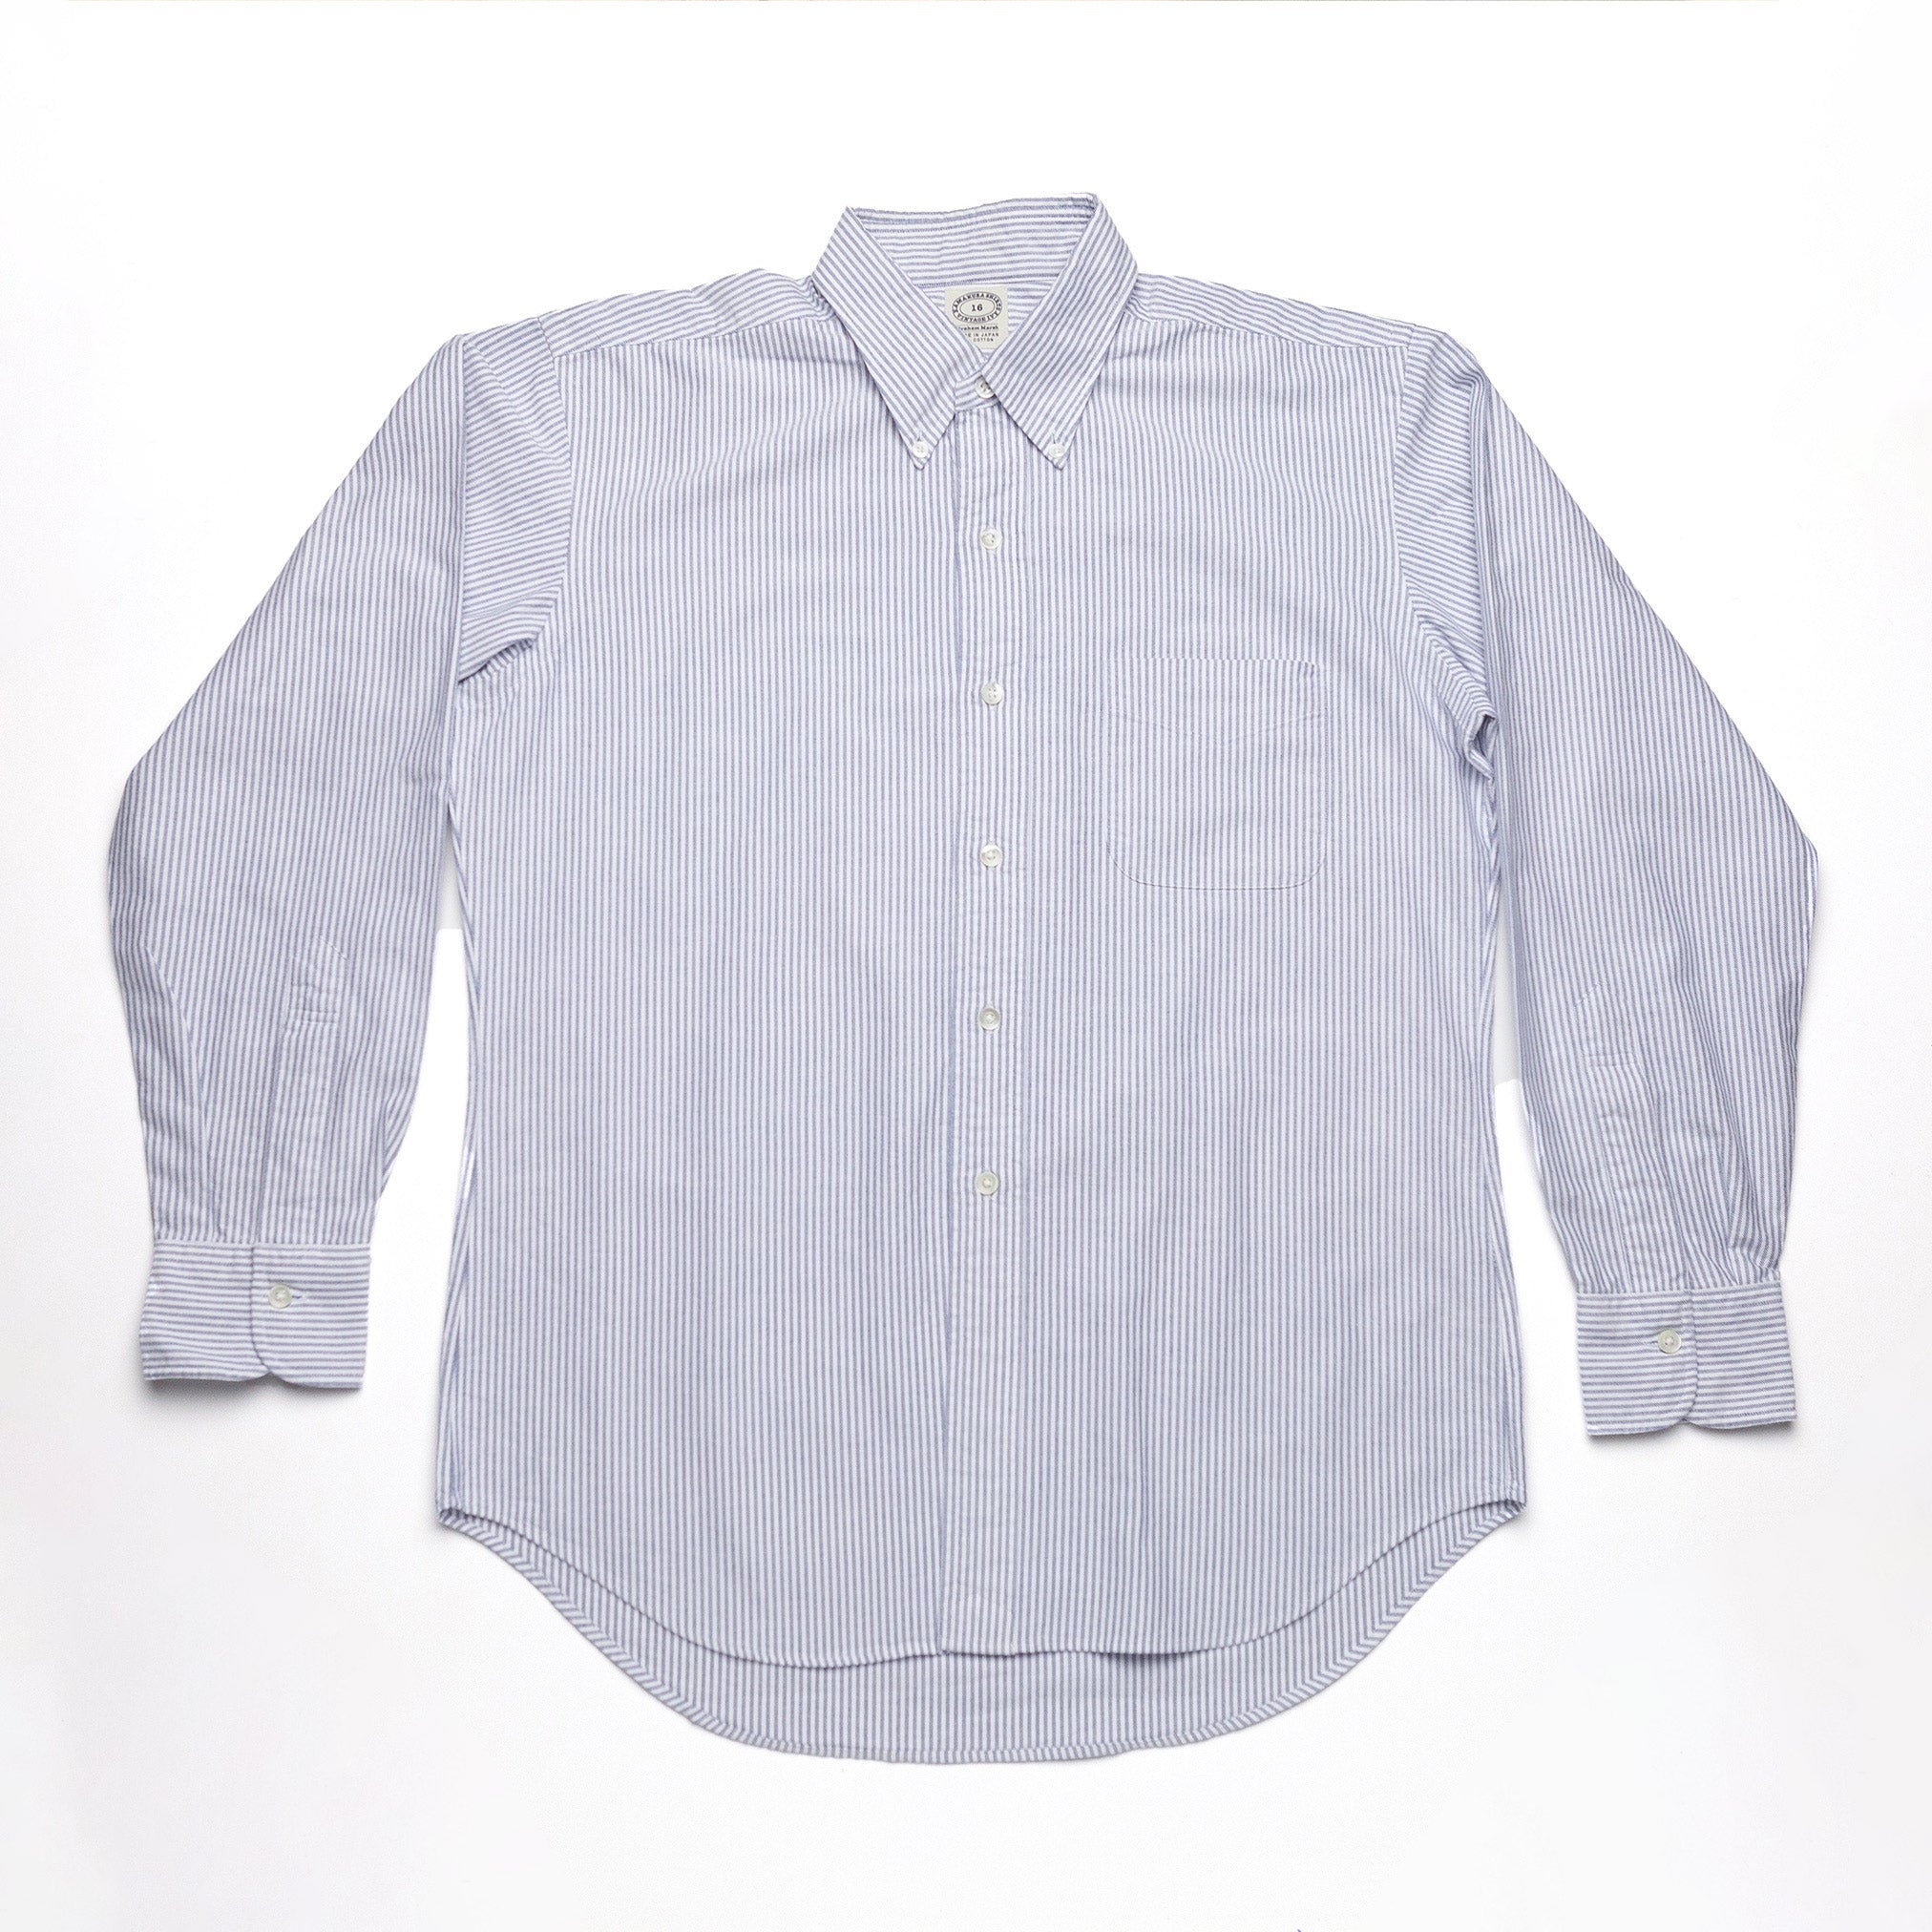 Graham Marsh Vintage Ivy Shirt - Size 16